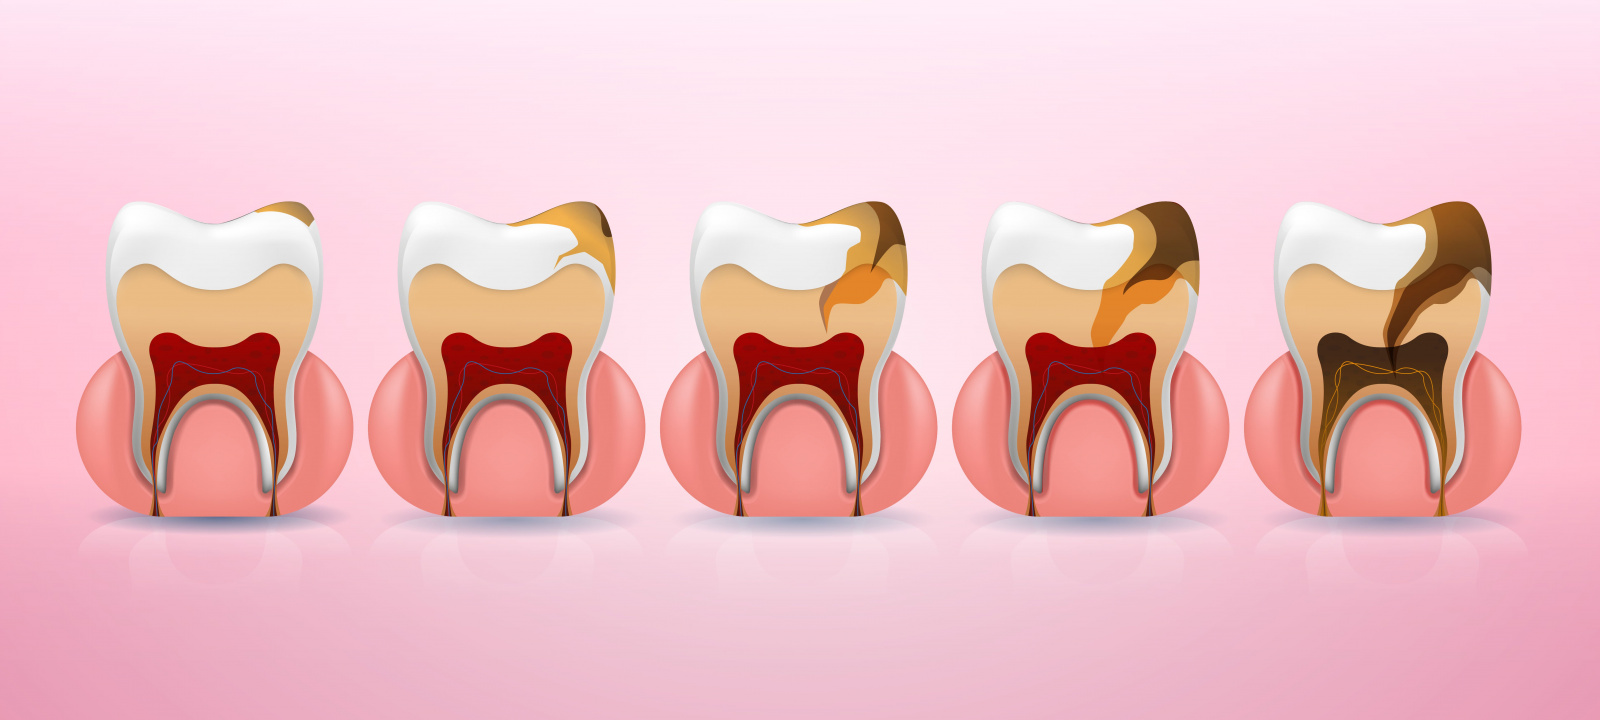 стадии развития кариеса зуба